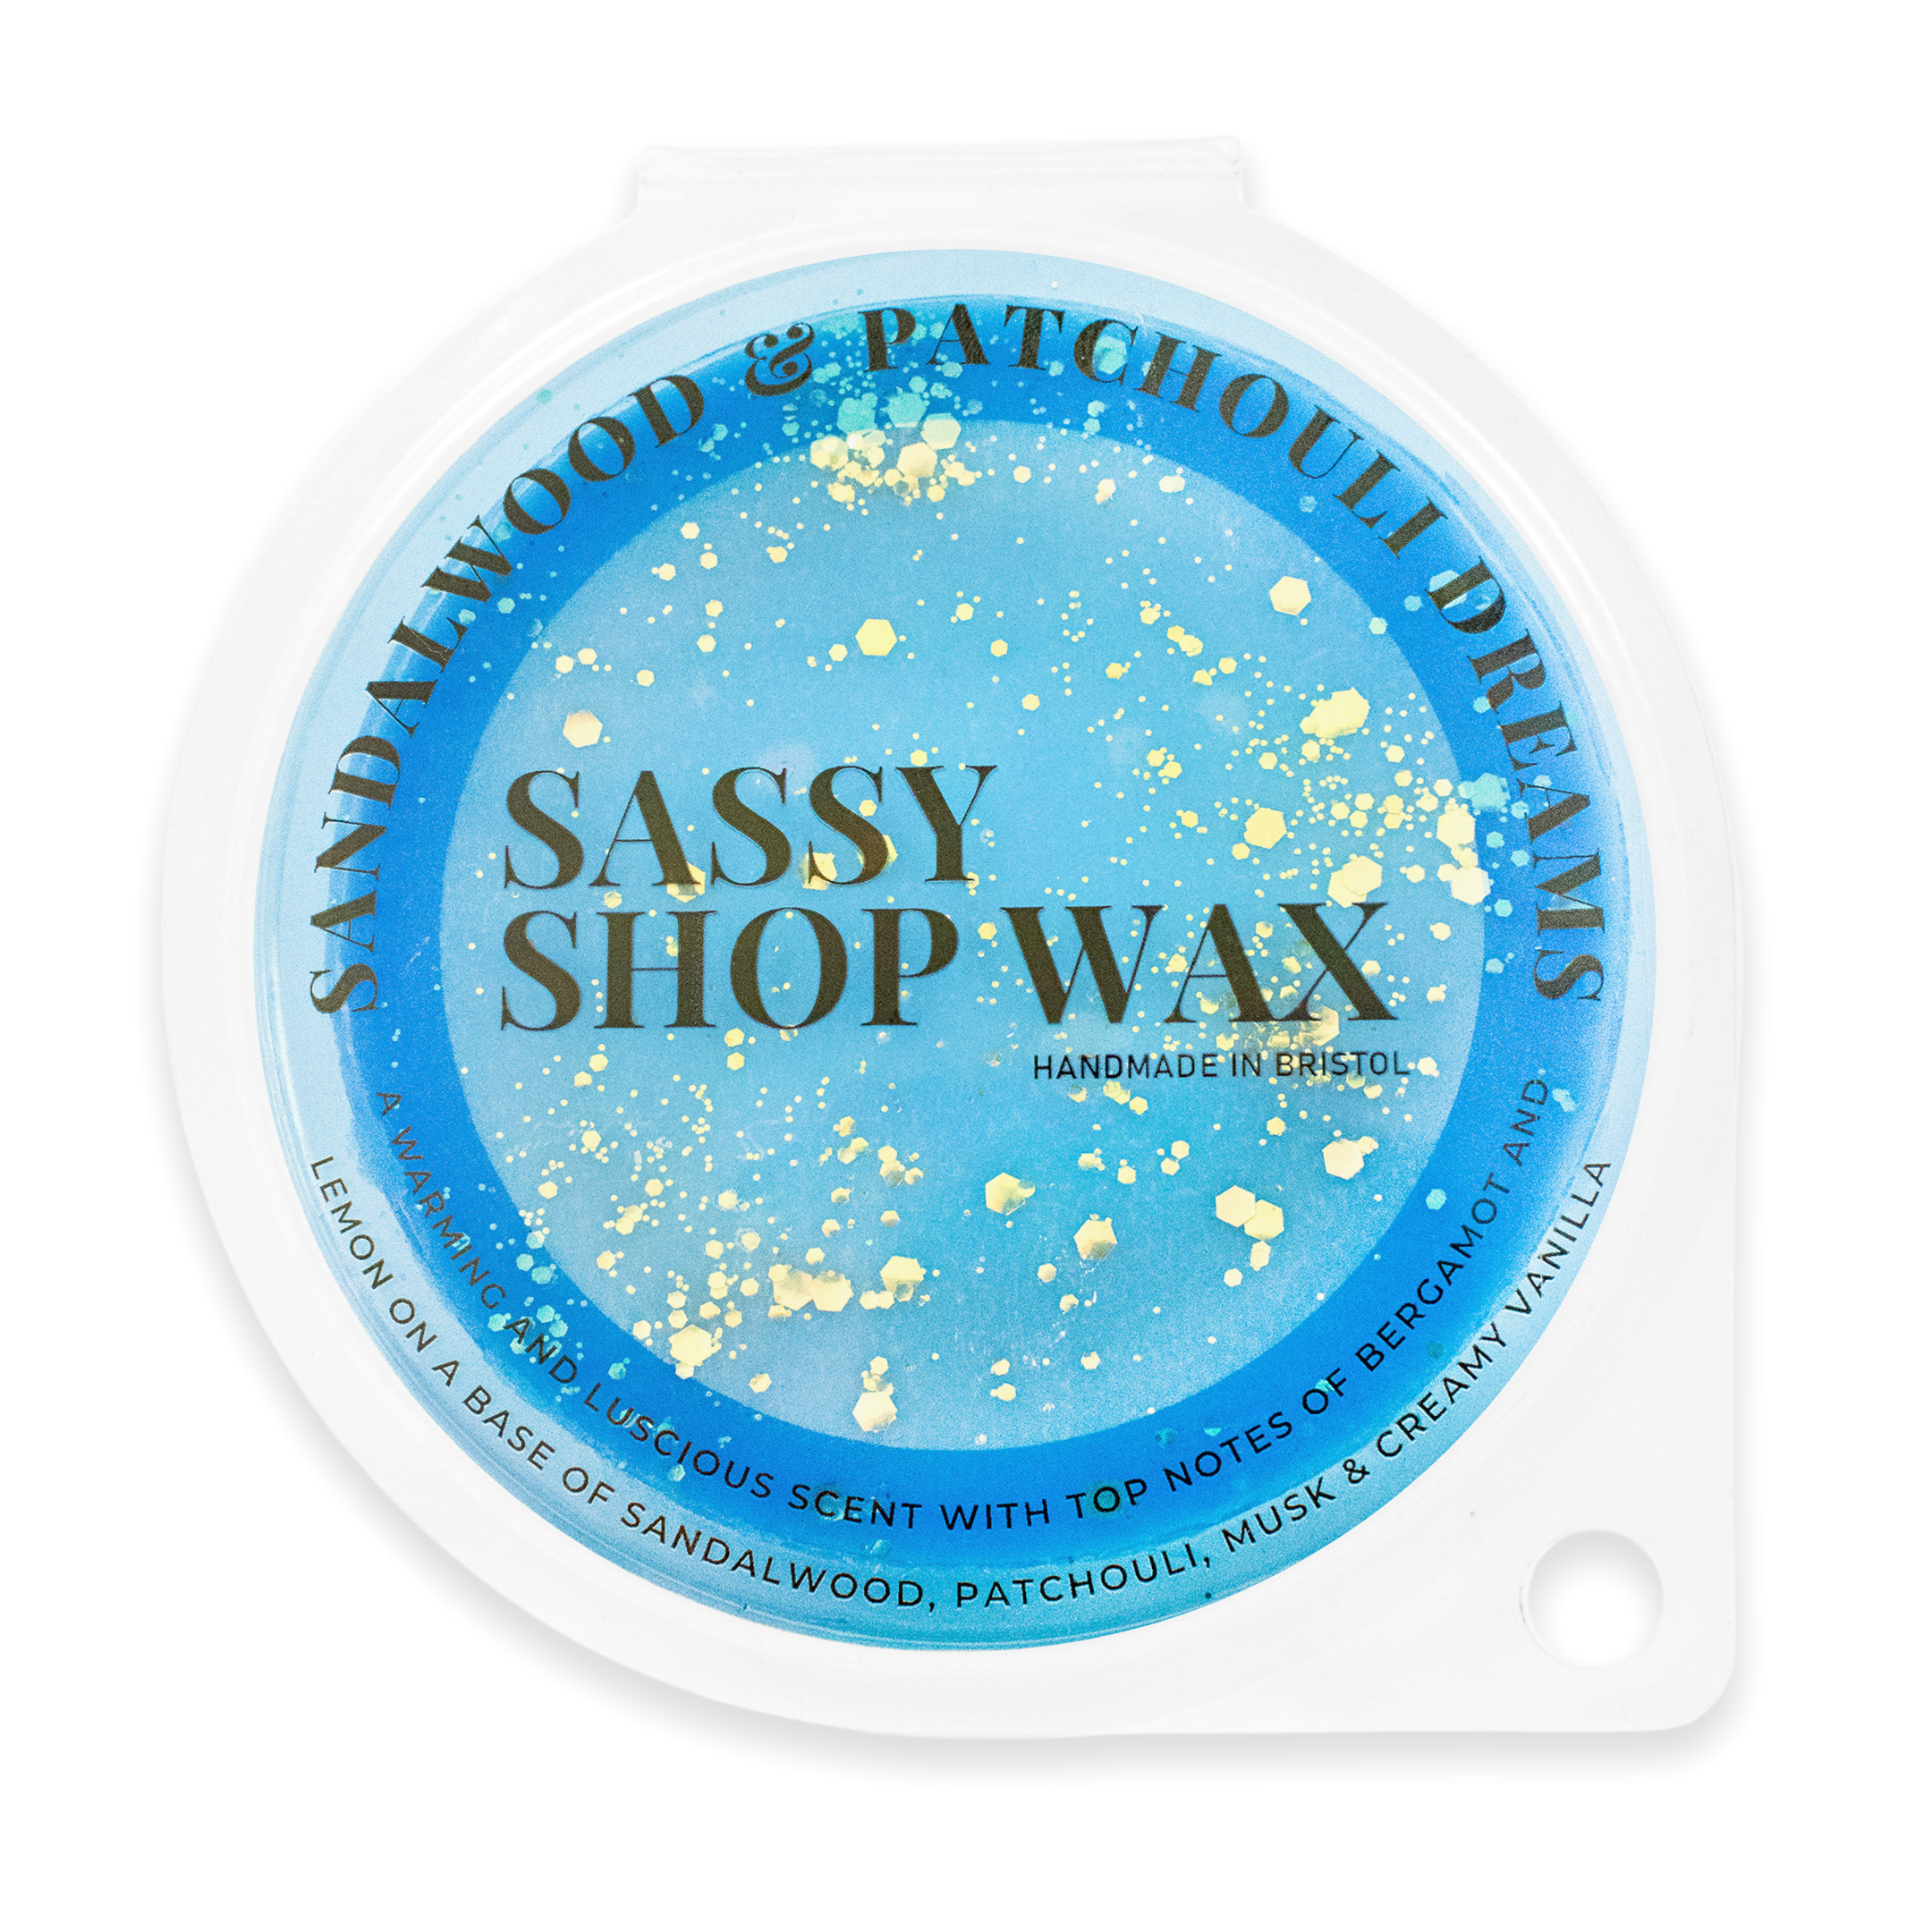 Wax Melt Sandalwood & Patchouli Dreams Segment Pot by Sassy Shop Wax XL Size - 70g